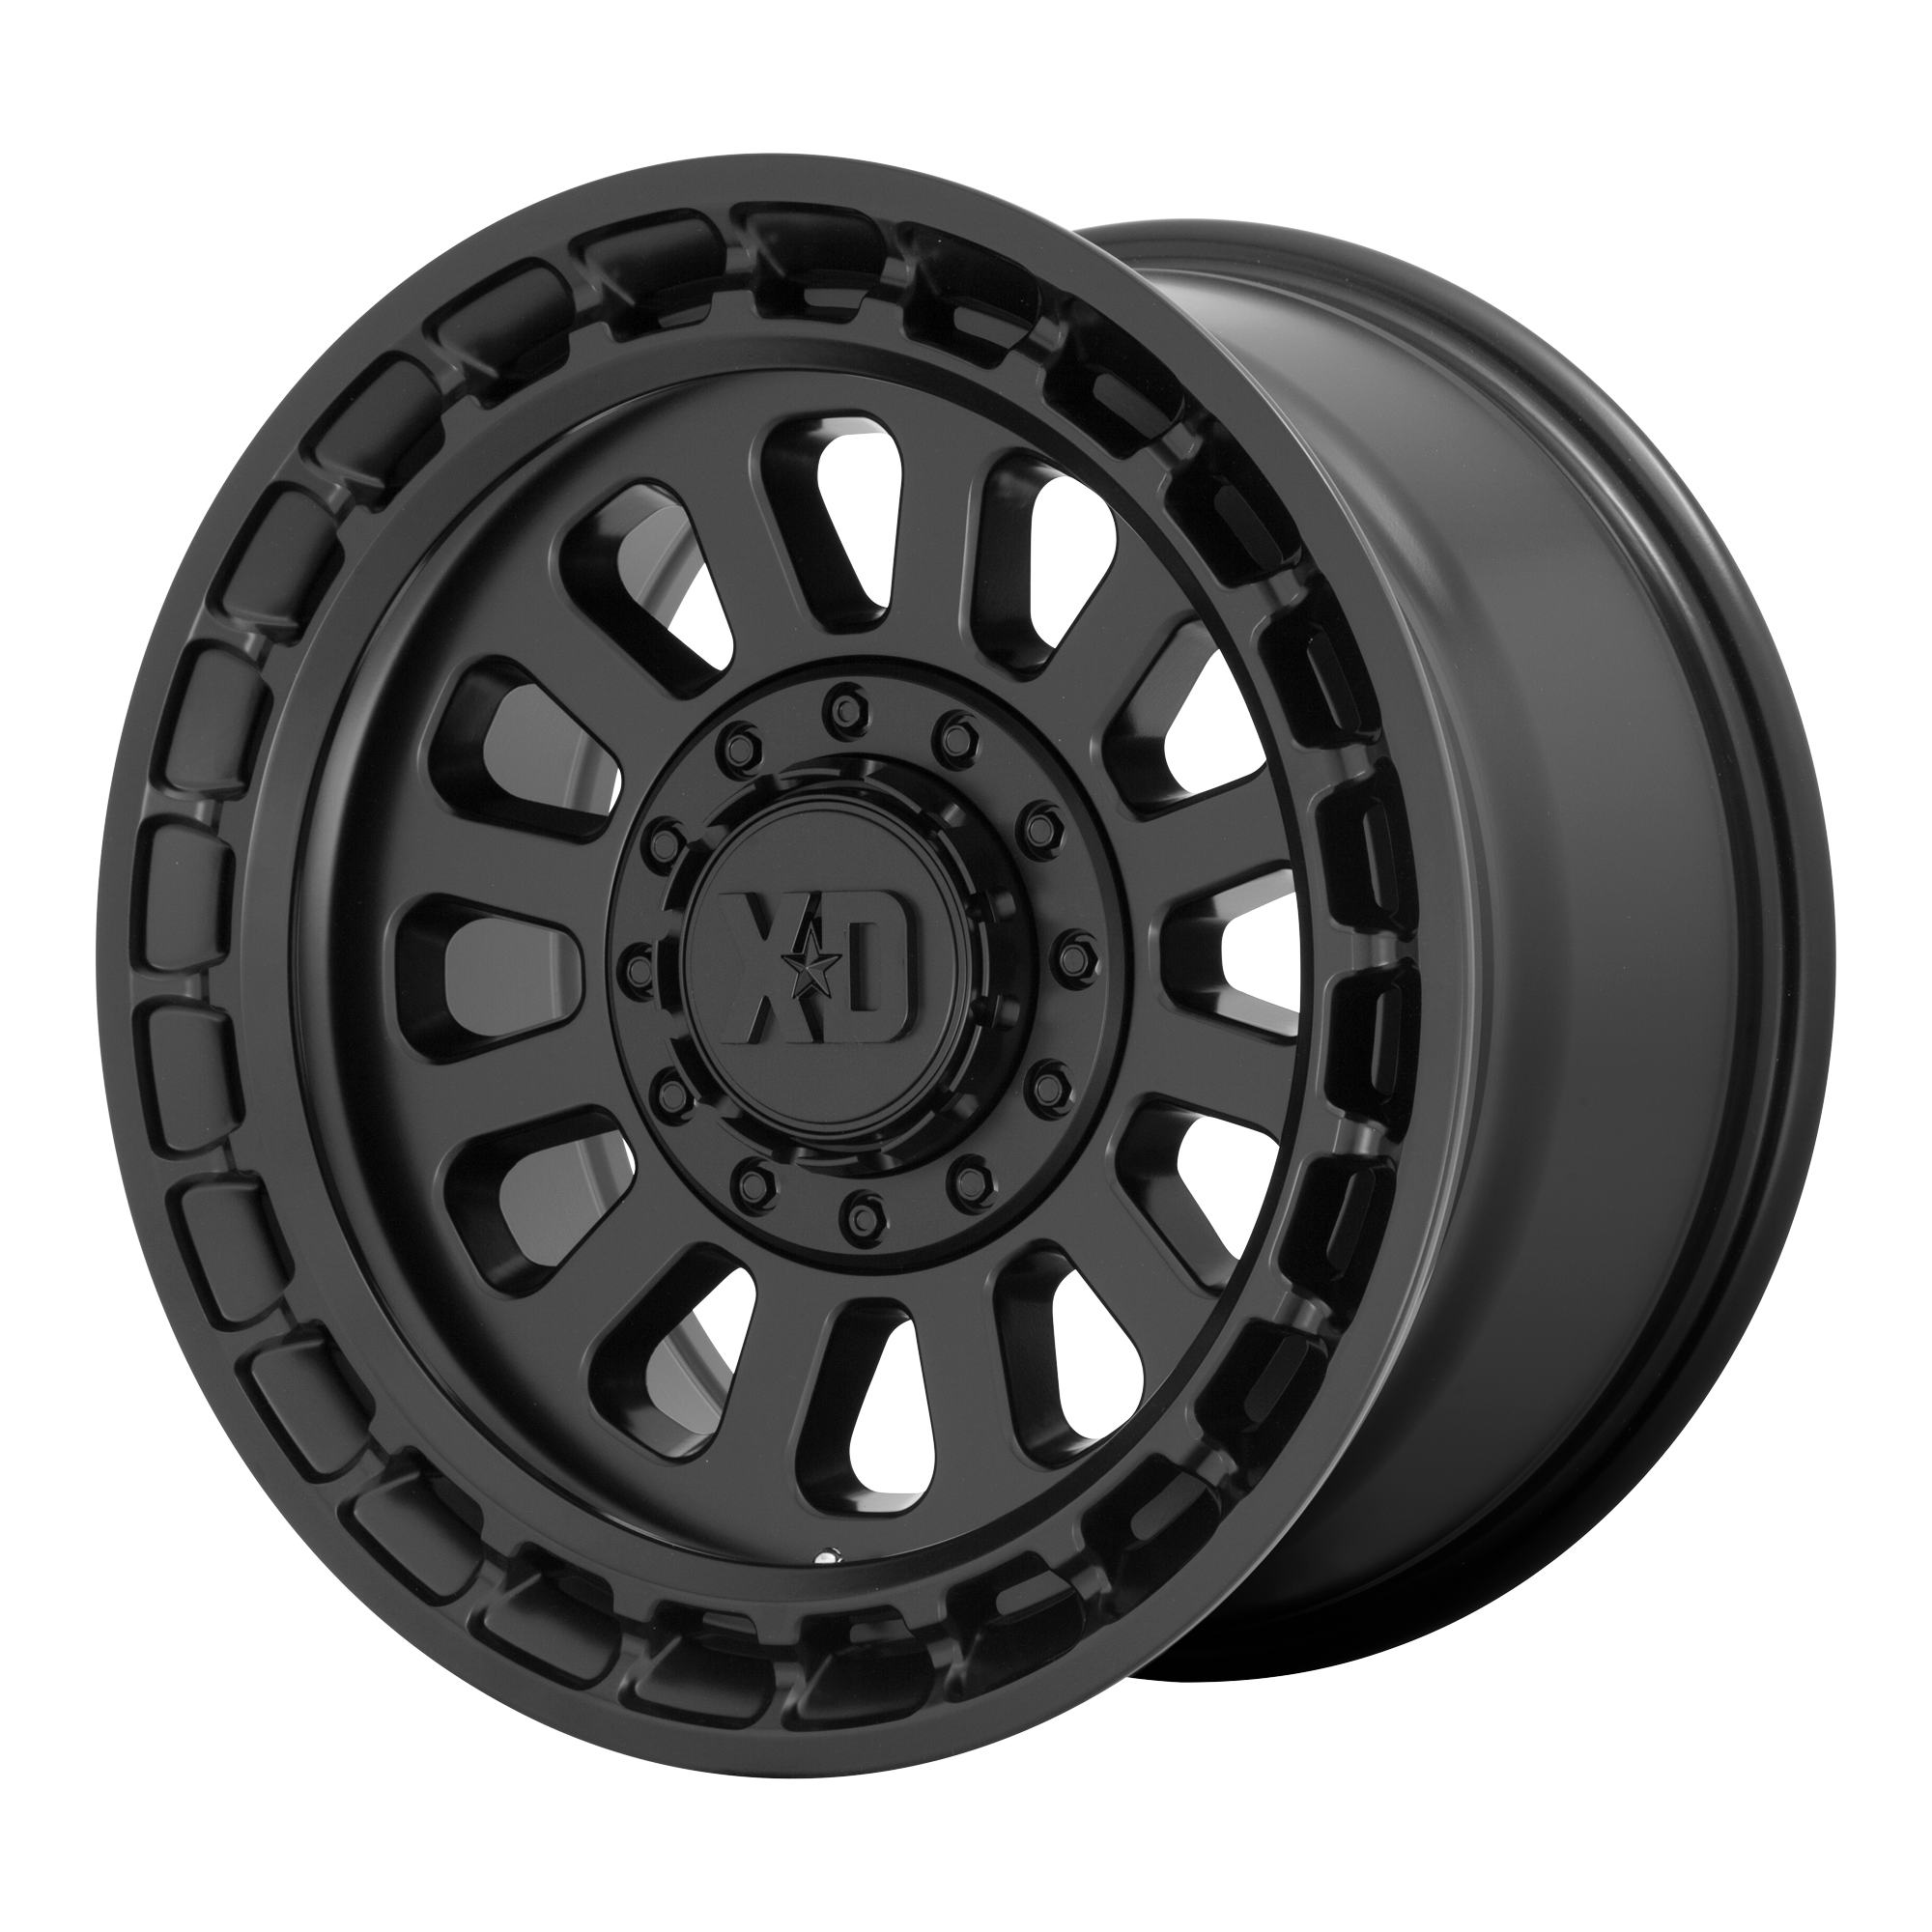 XD 17"x9" Non-Chrome Satin Black Custom Wheel ARSWCWXD85679067718